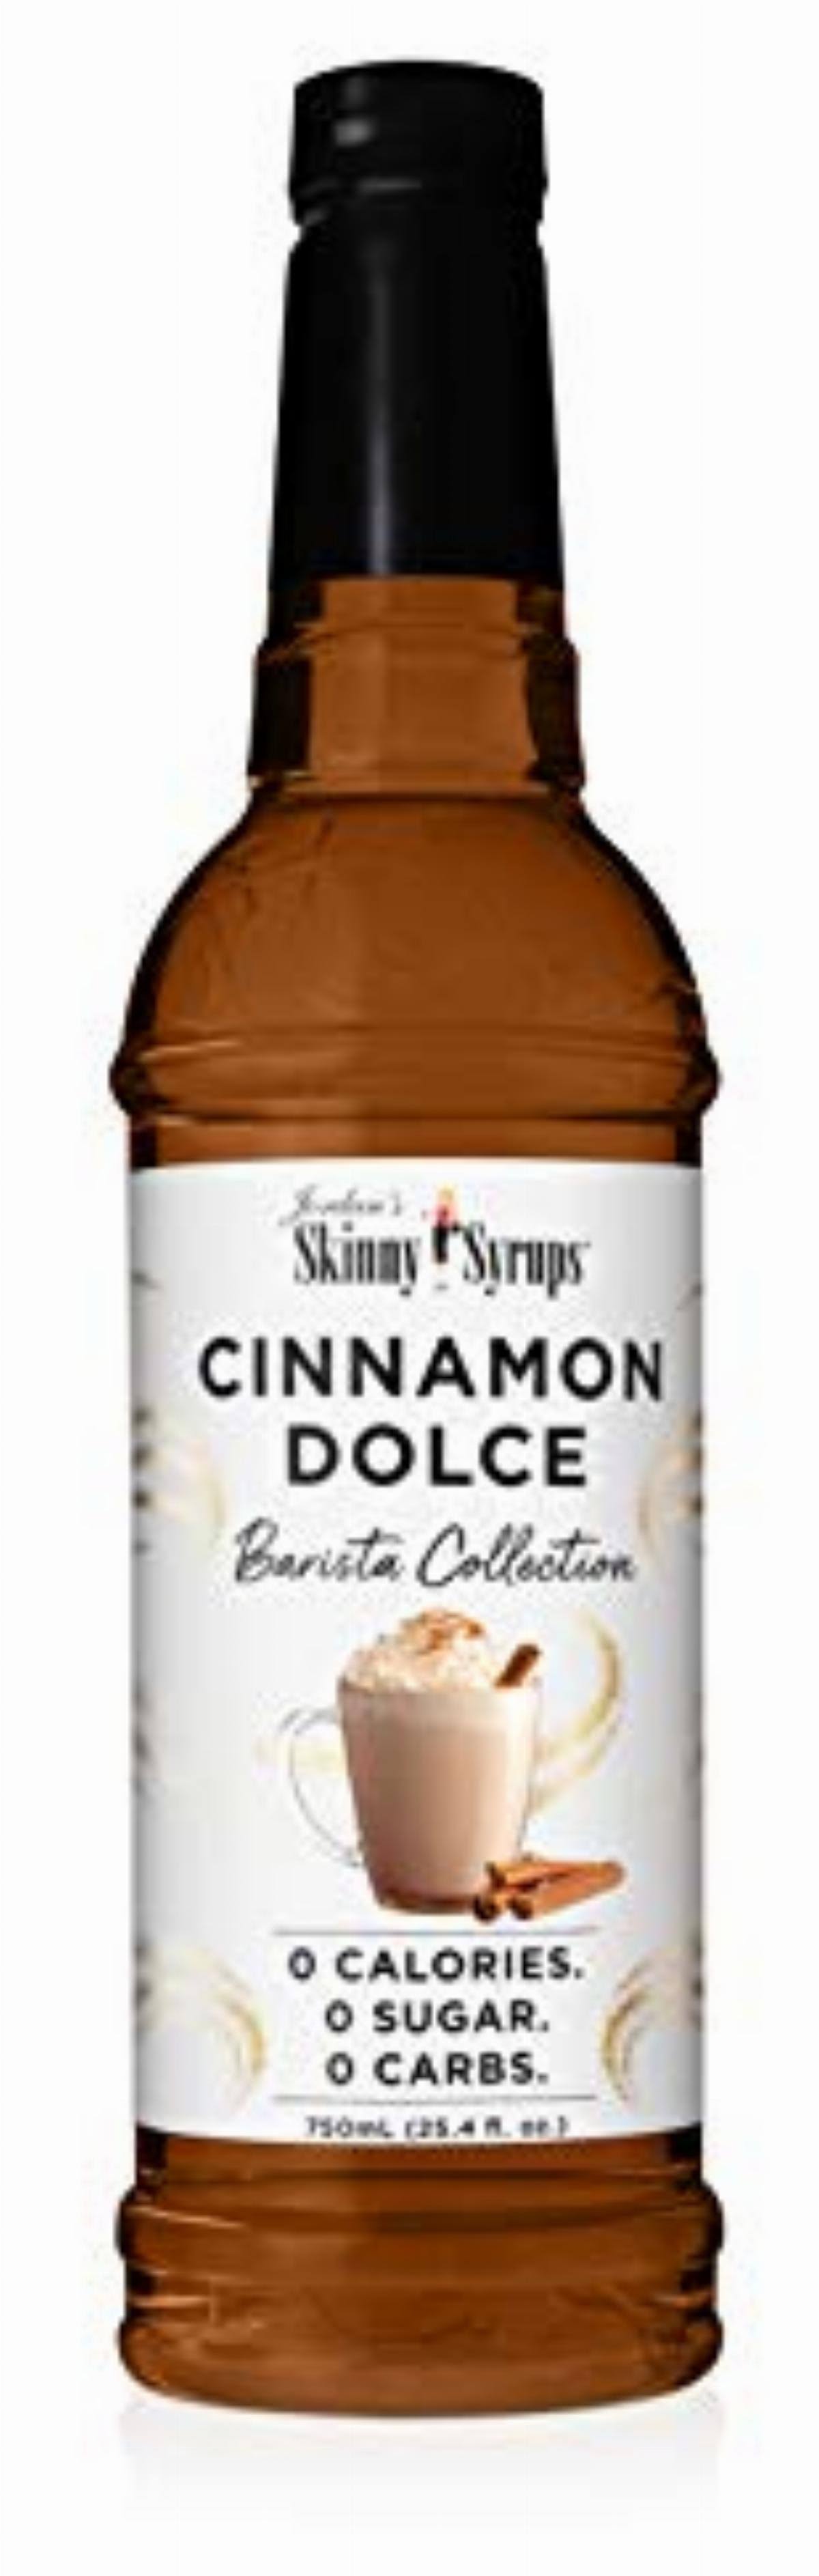 Jordan's Skinny Syrups Sugar Free Syrup 750ml Brown Sugar Cinnamon